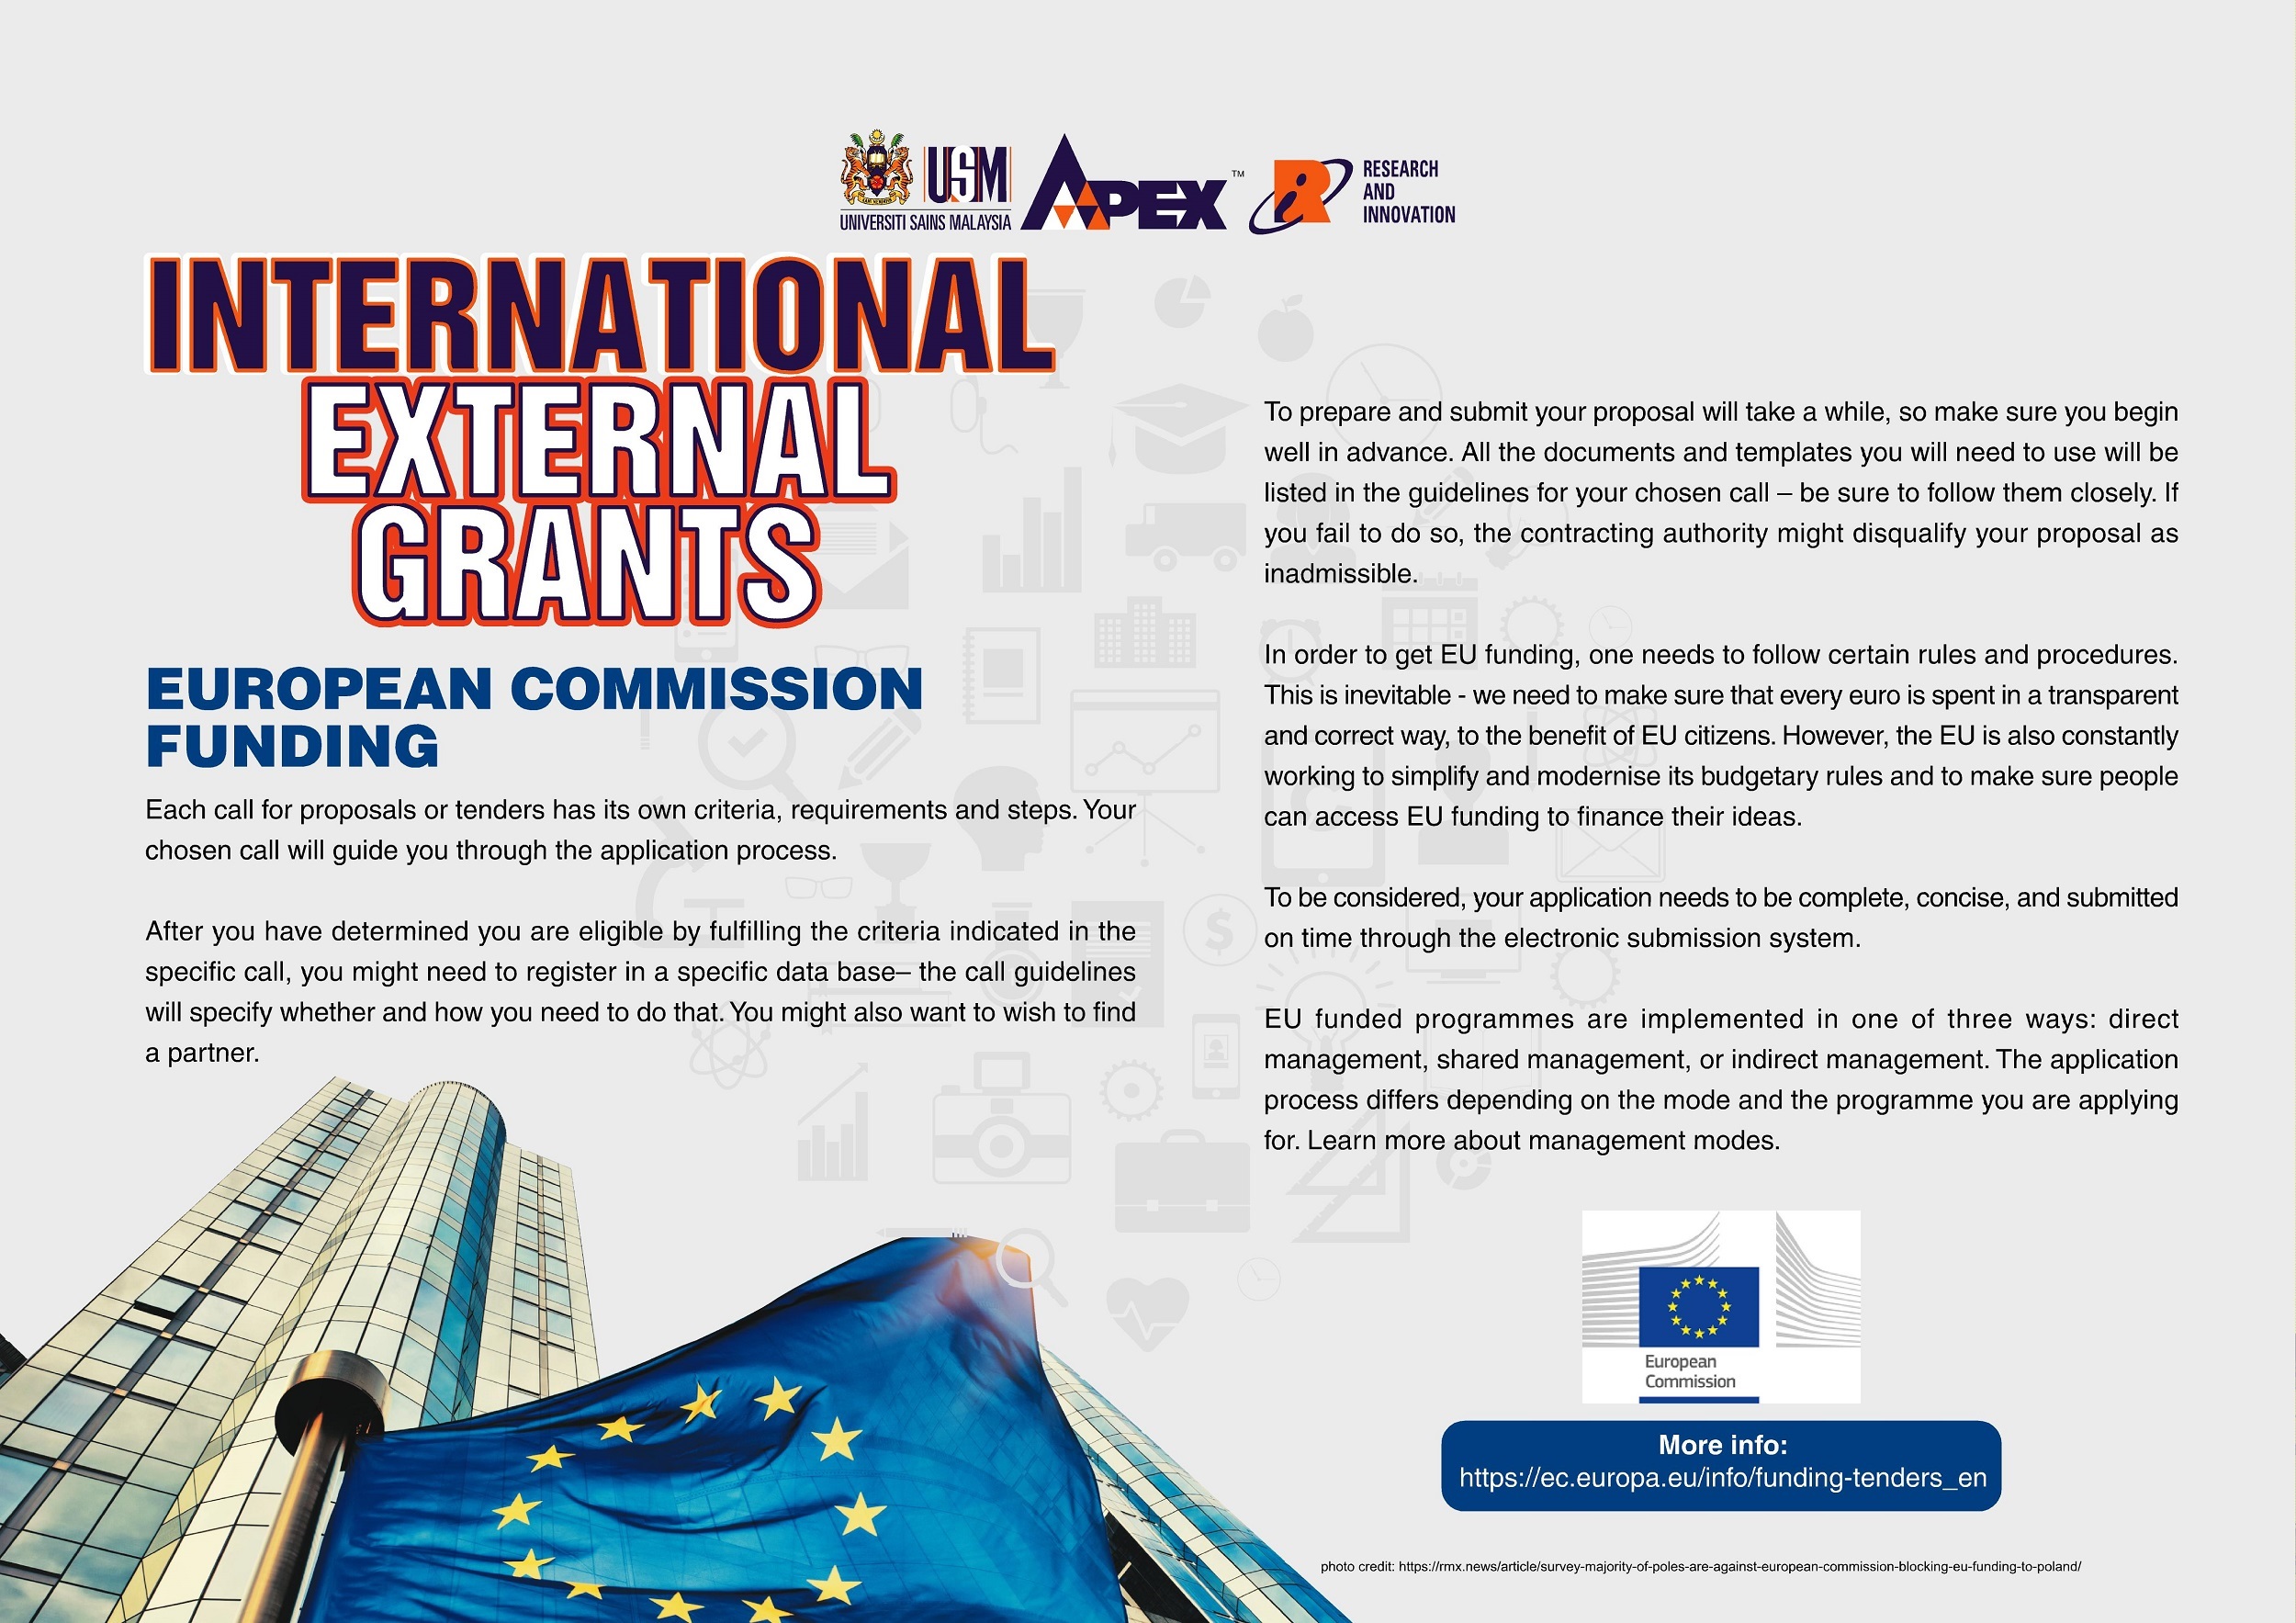 Poster External Grants International EUROPEAN COMMISSION FUNDING edited